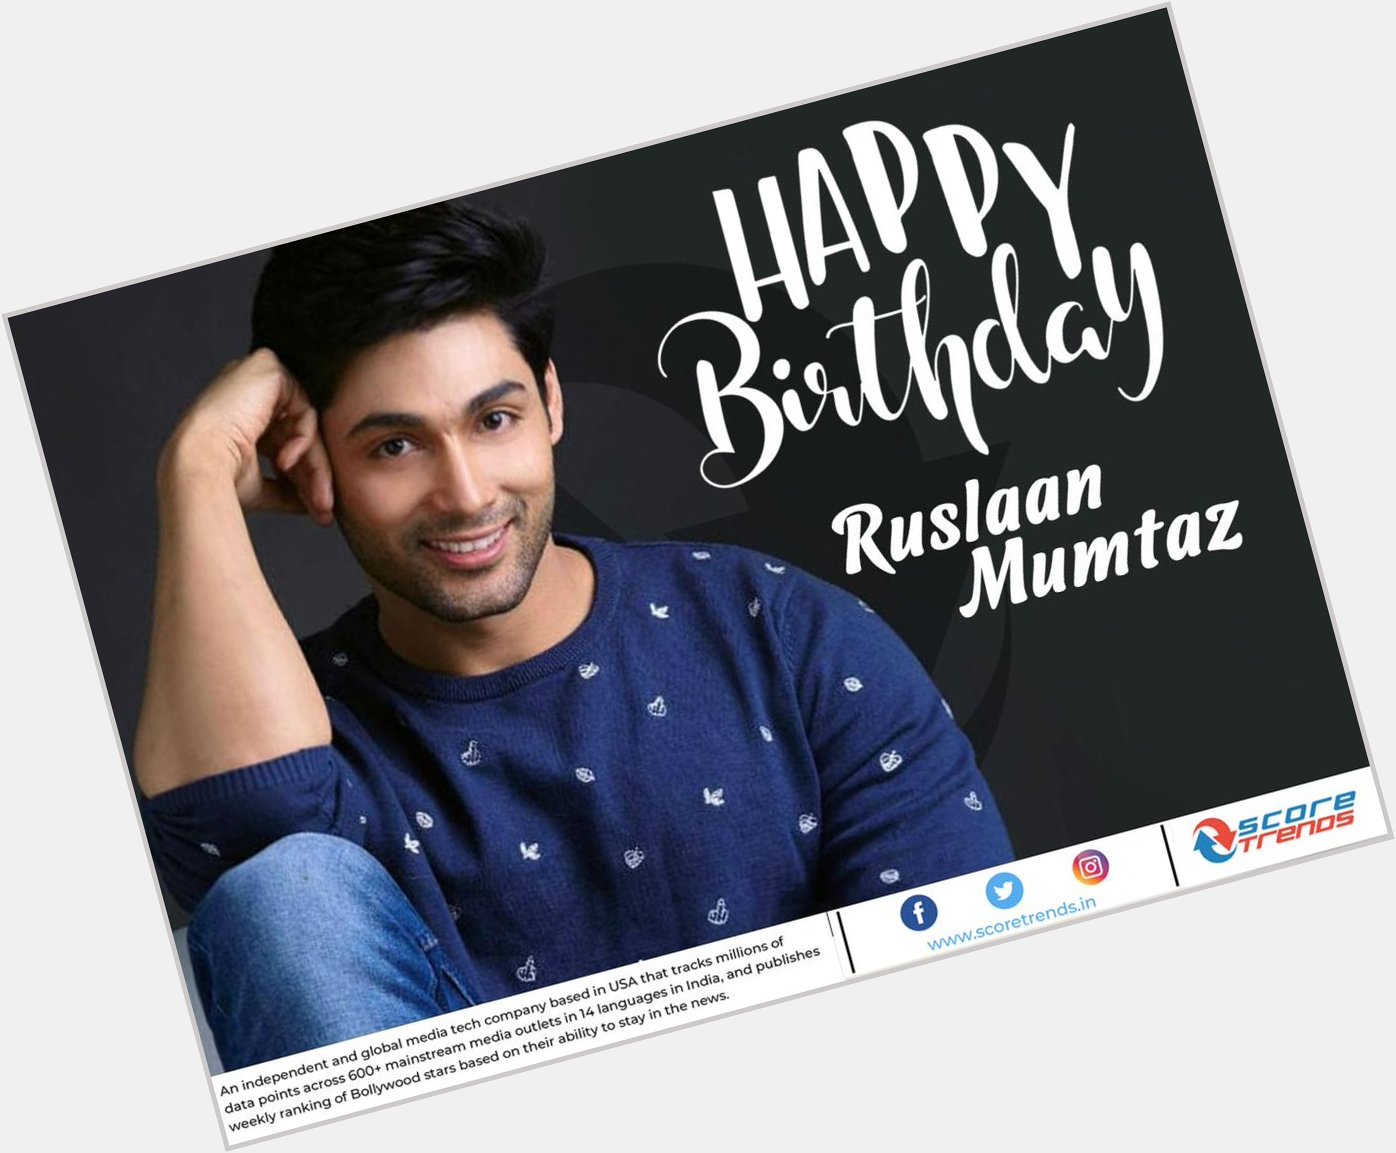 Score Trends wishes Ruslaan Mumtaz a Happy Birthday!! 